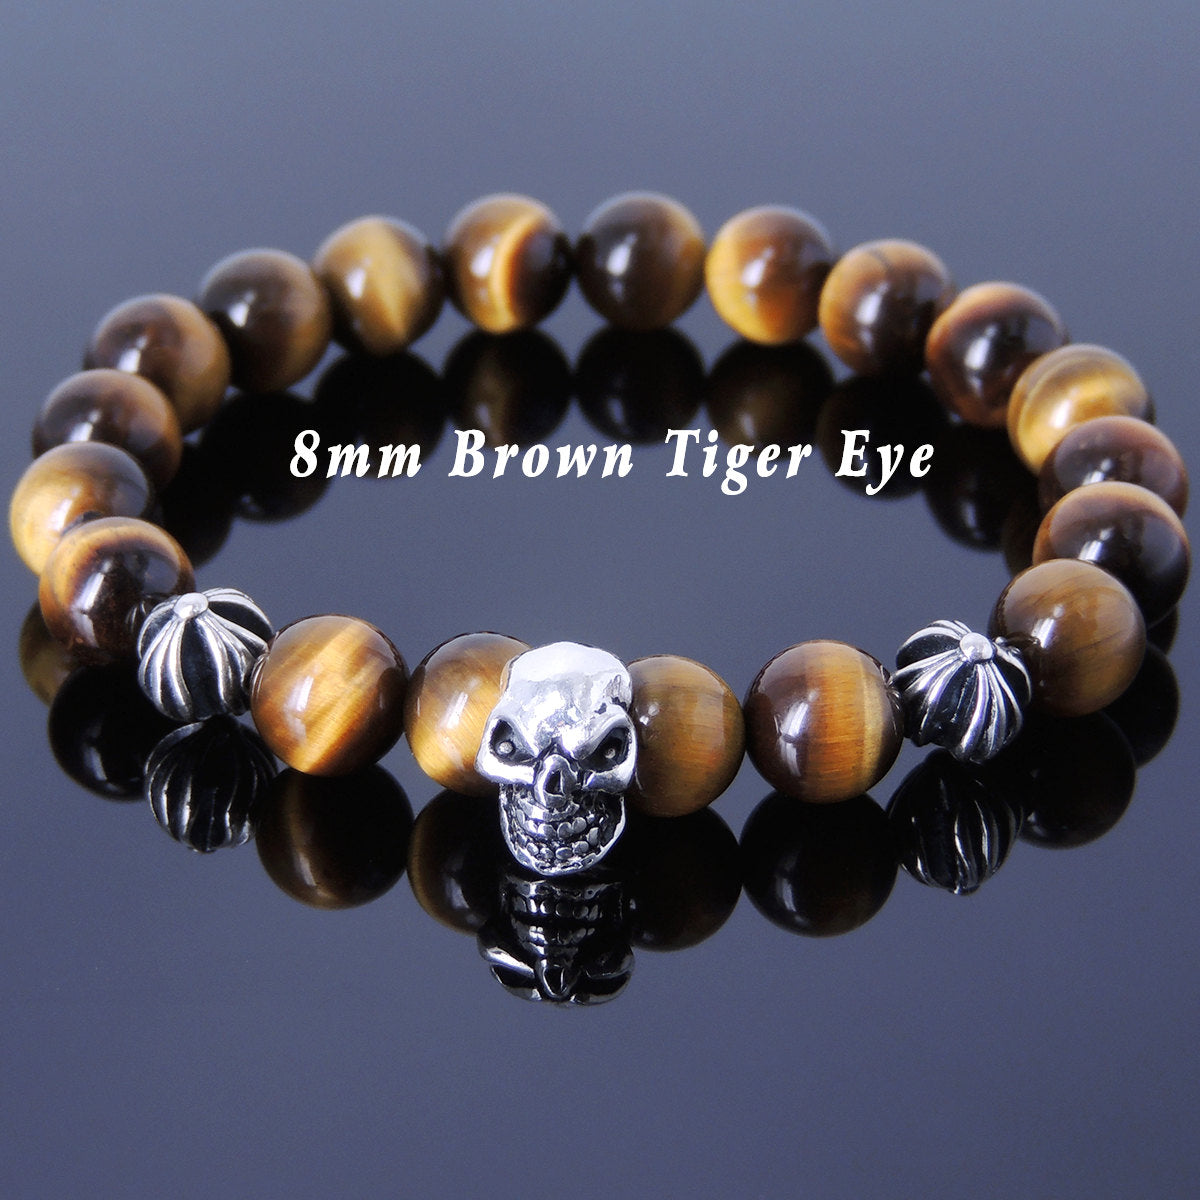 8mm Brown Tiger Eye Healing Gemstone Bracelet with S925 Sterling Silver Protective Skull & Cross Beads- Handmade by Gem & Silver BR752